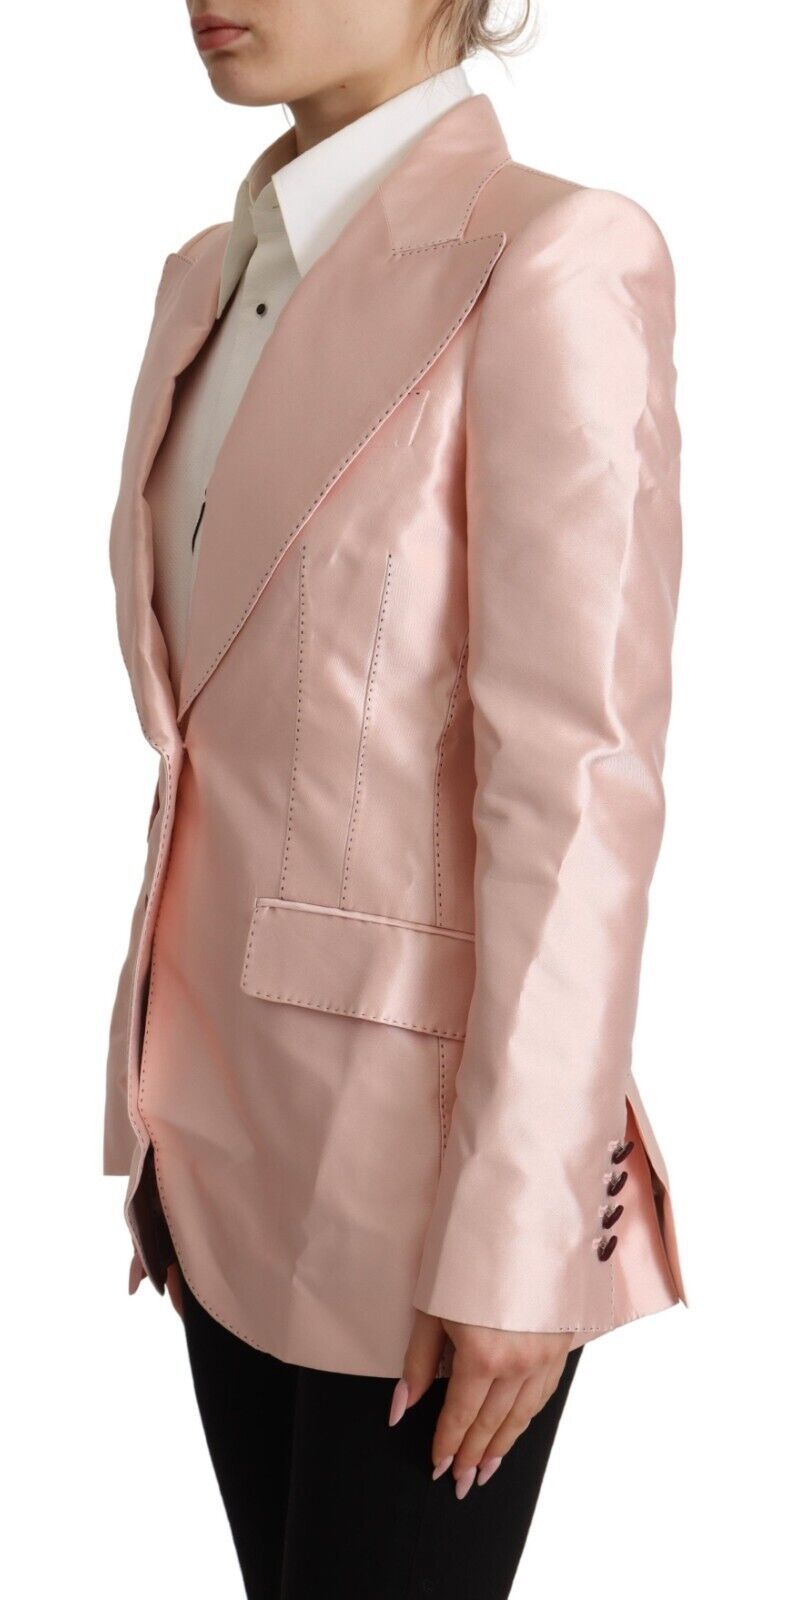 Giacca per blazer maniche lunghe Dolce & Gabbana Pink Long Blazer